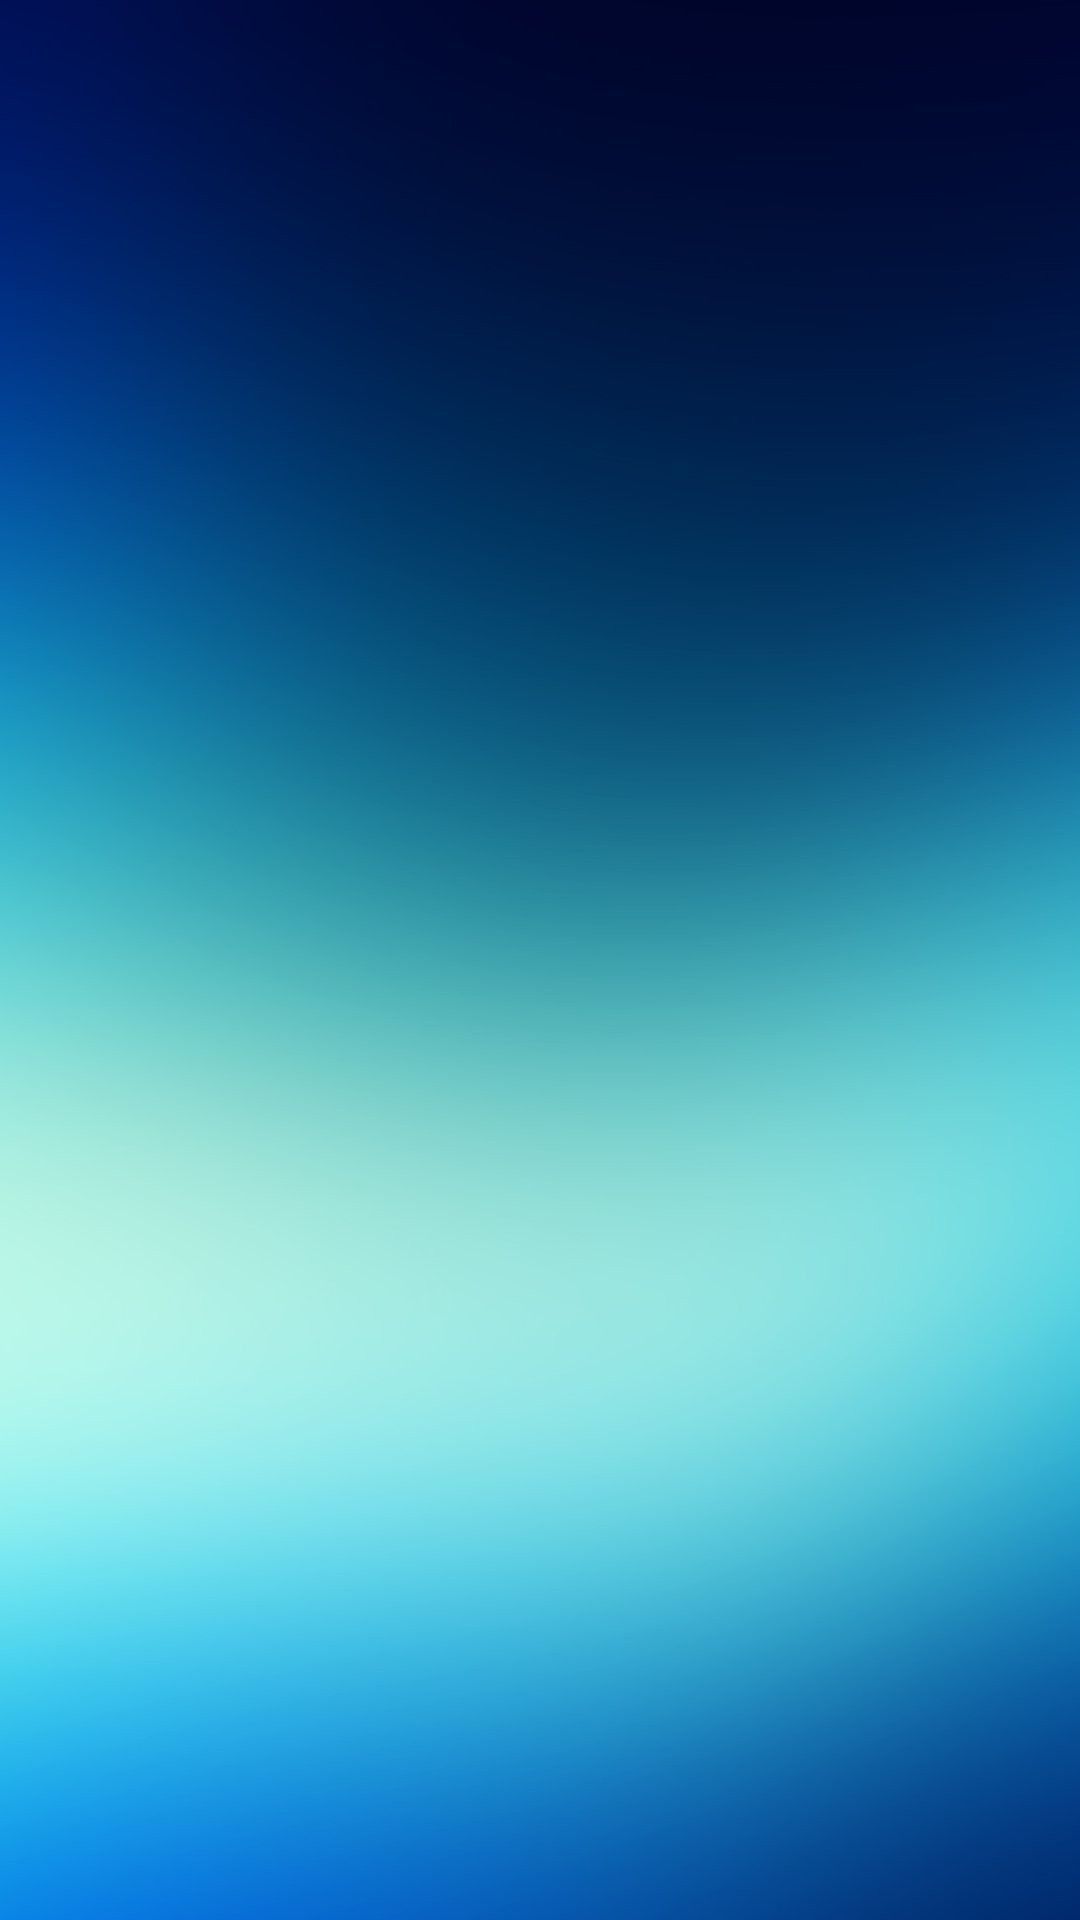 Share 54+ dark blue iphone wallpaper latest - in.cdgdbentre